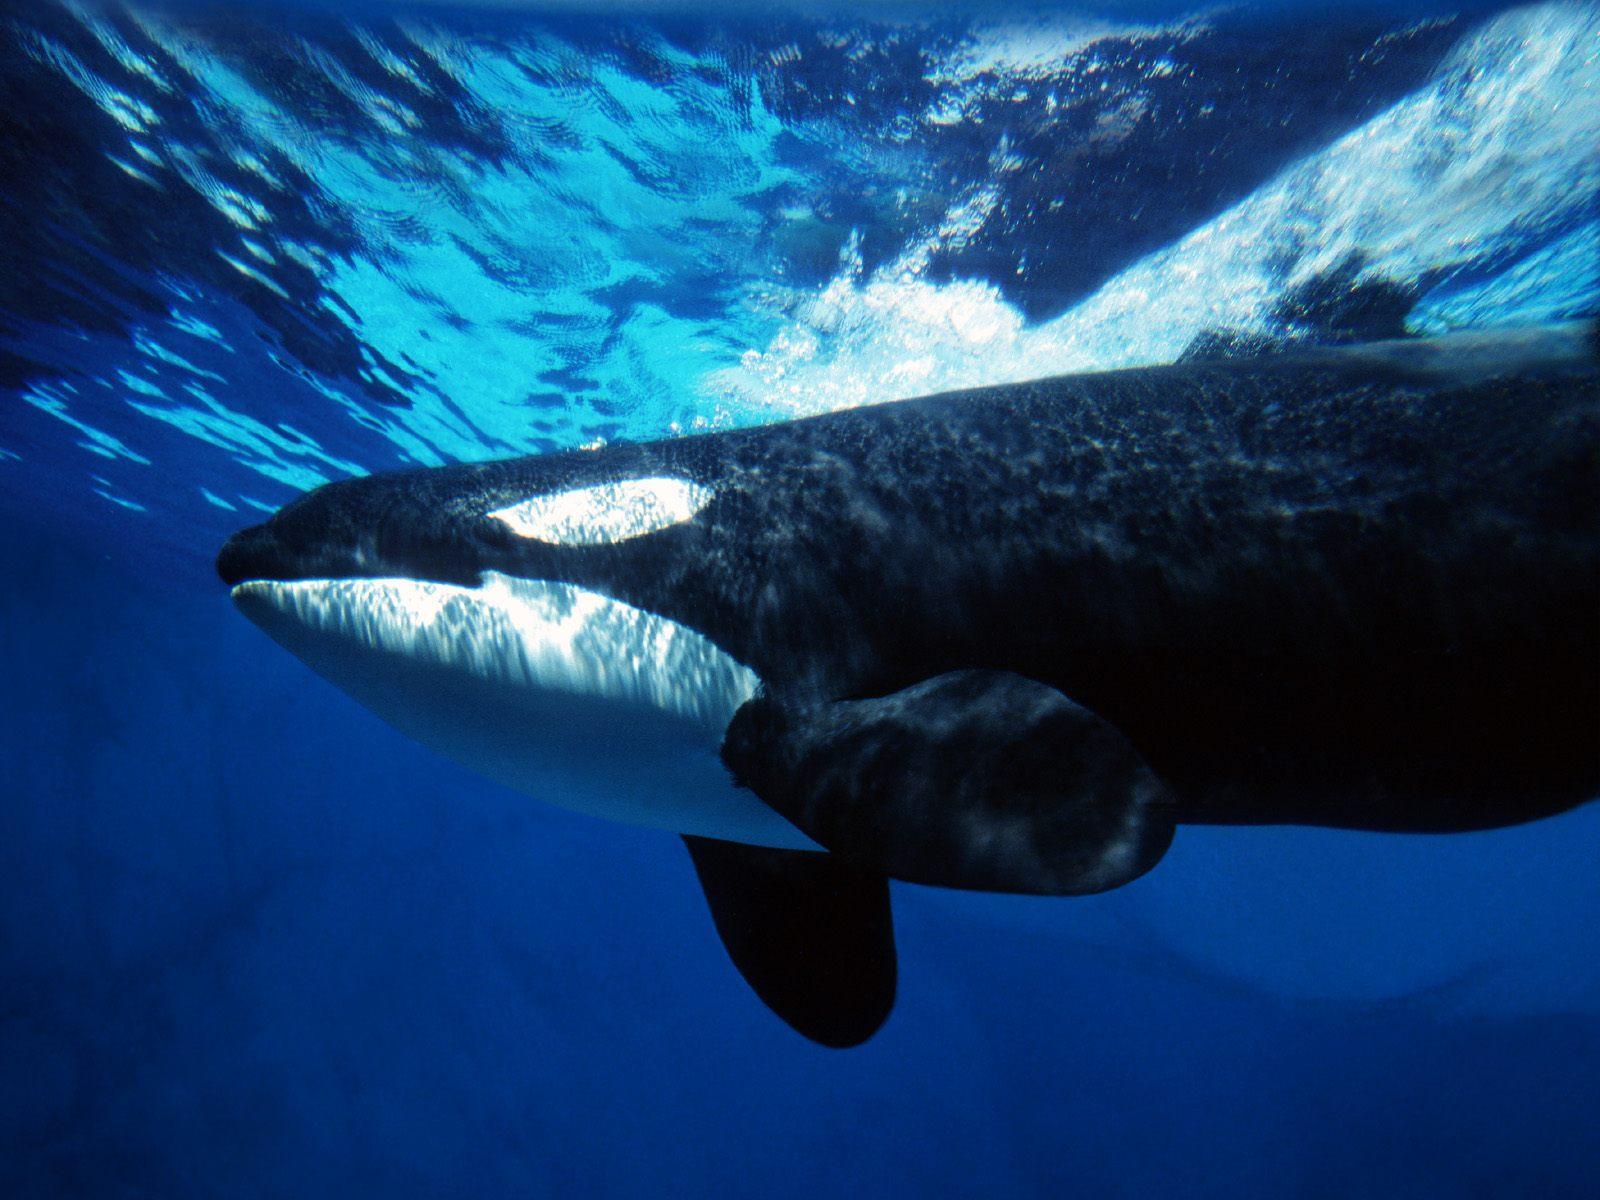 Orca whale underwater free desktop background wallpaper image